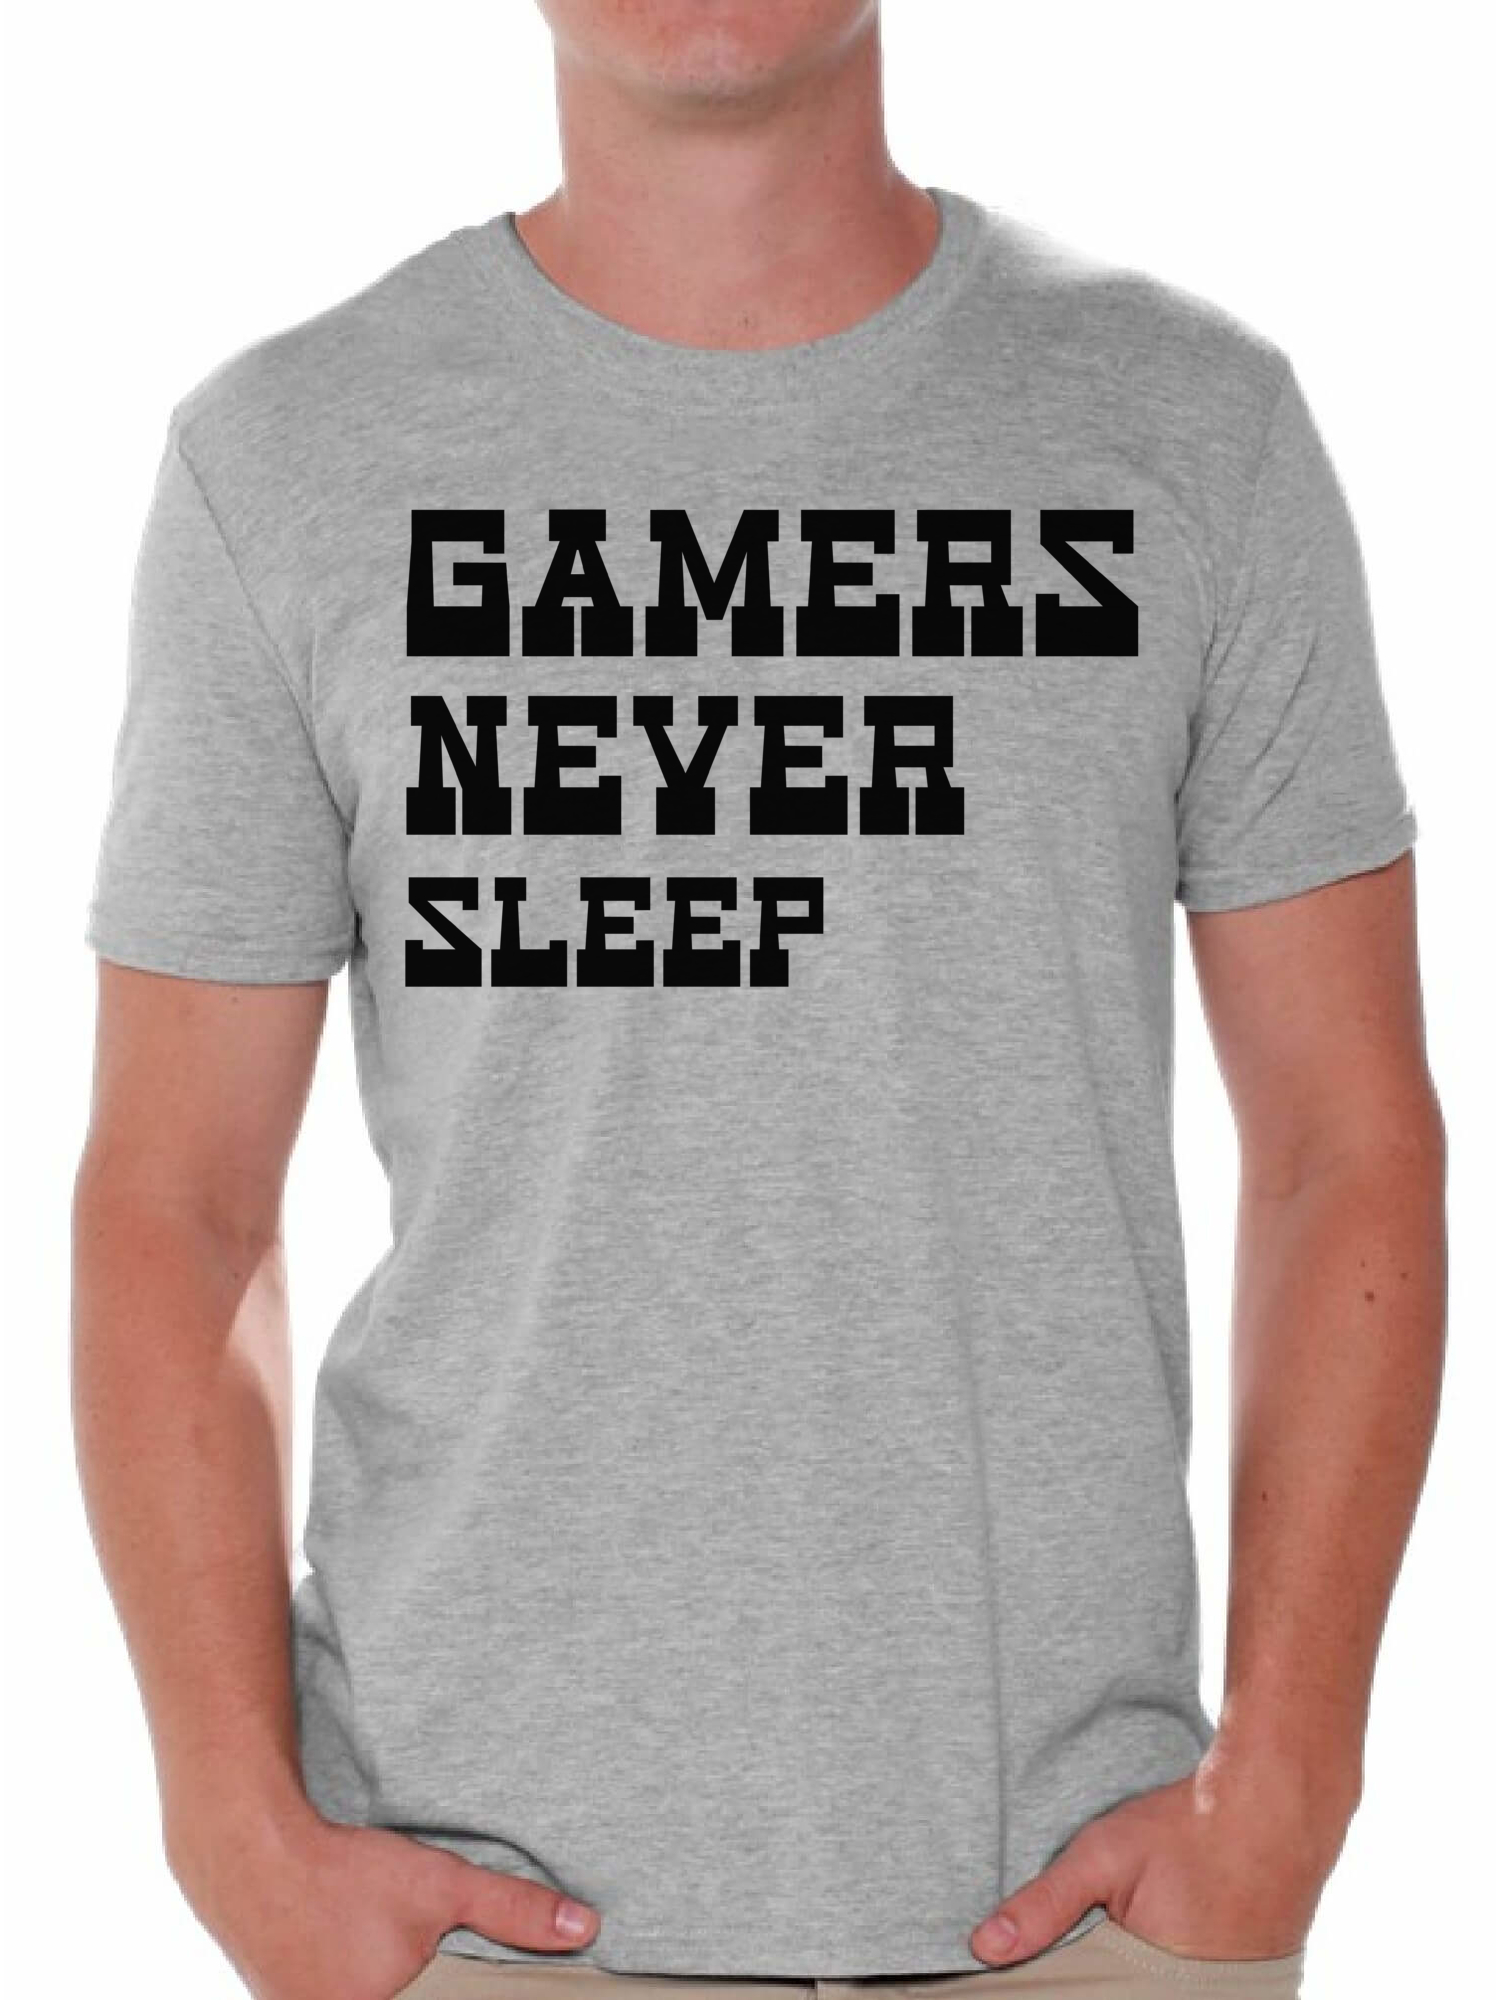 Awkward Styles Mens Graphic Shirts Men's Graphic T-shirts Men's Graphic Tees for Sarcastic Funny Geek Humor Gamers Never Sleep Shirt Mens Novelty Shirts - image 1 of 4